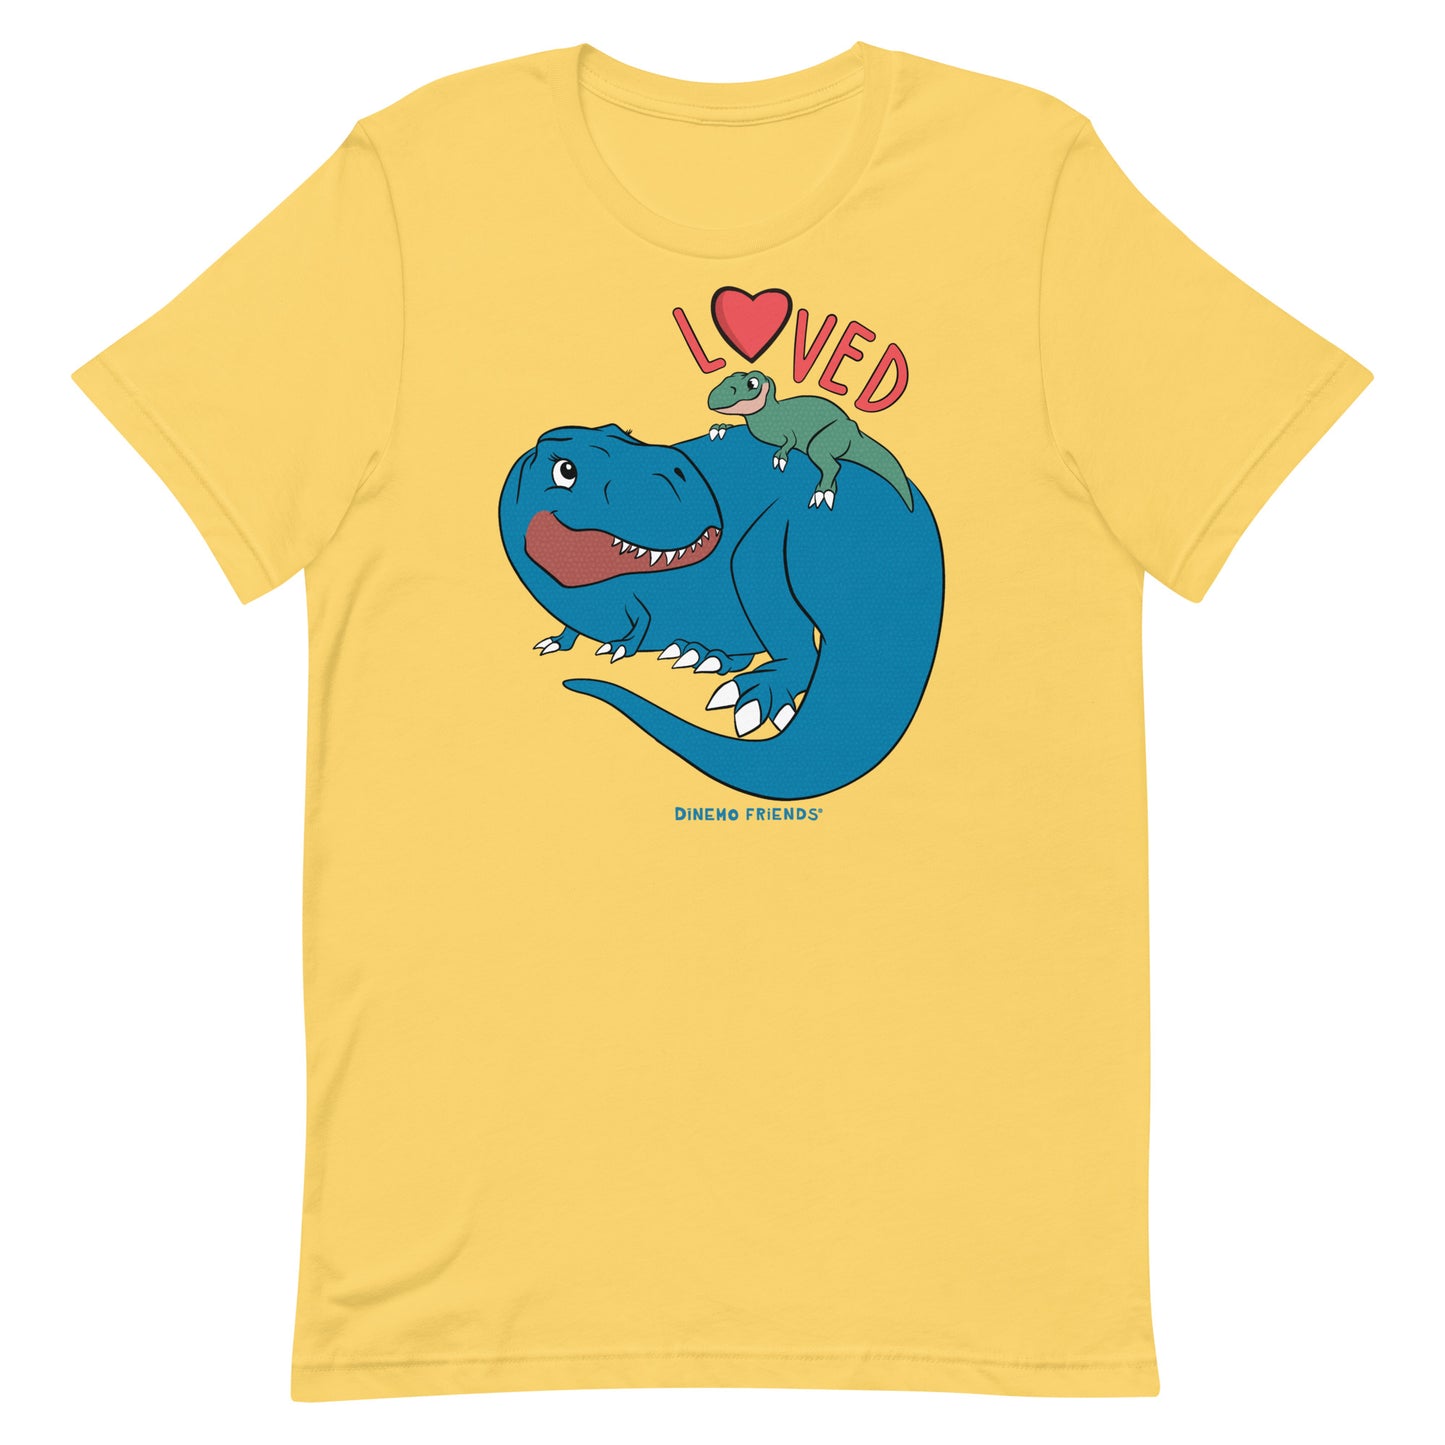 Loved Dino T-Shirt